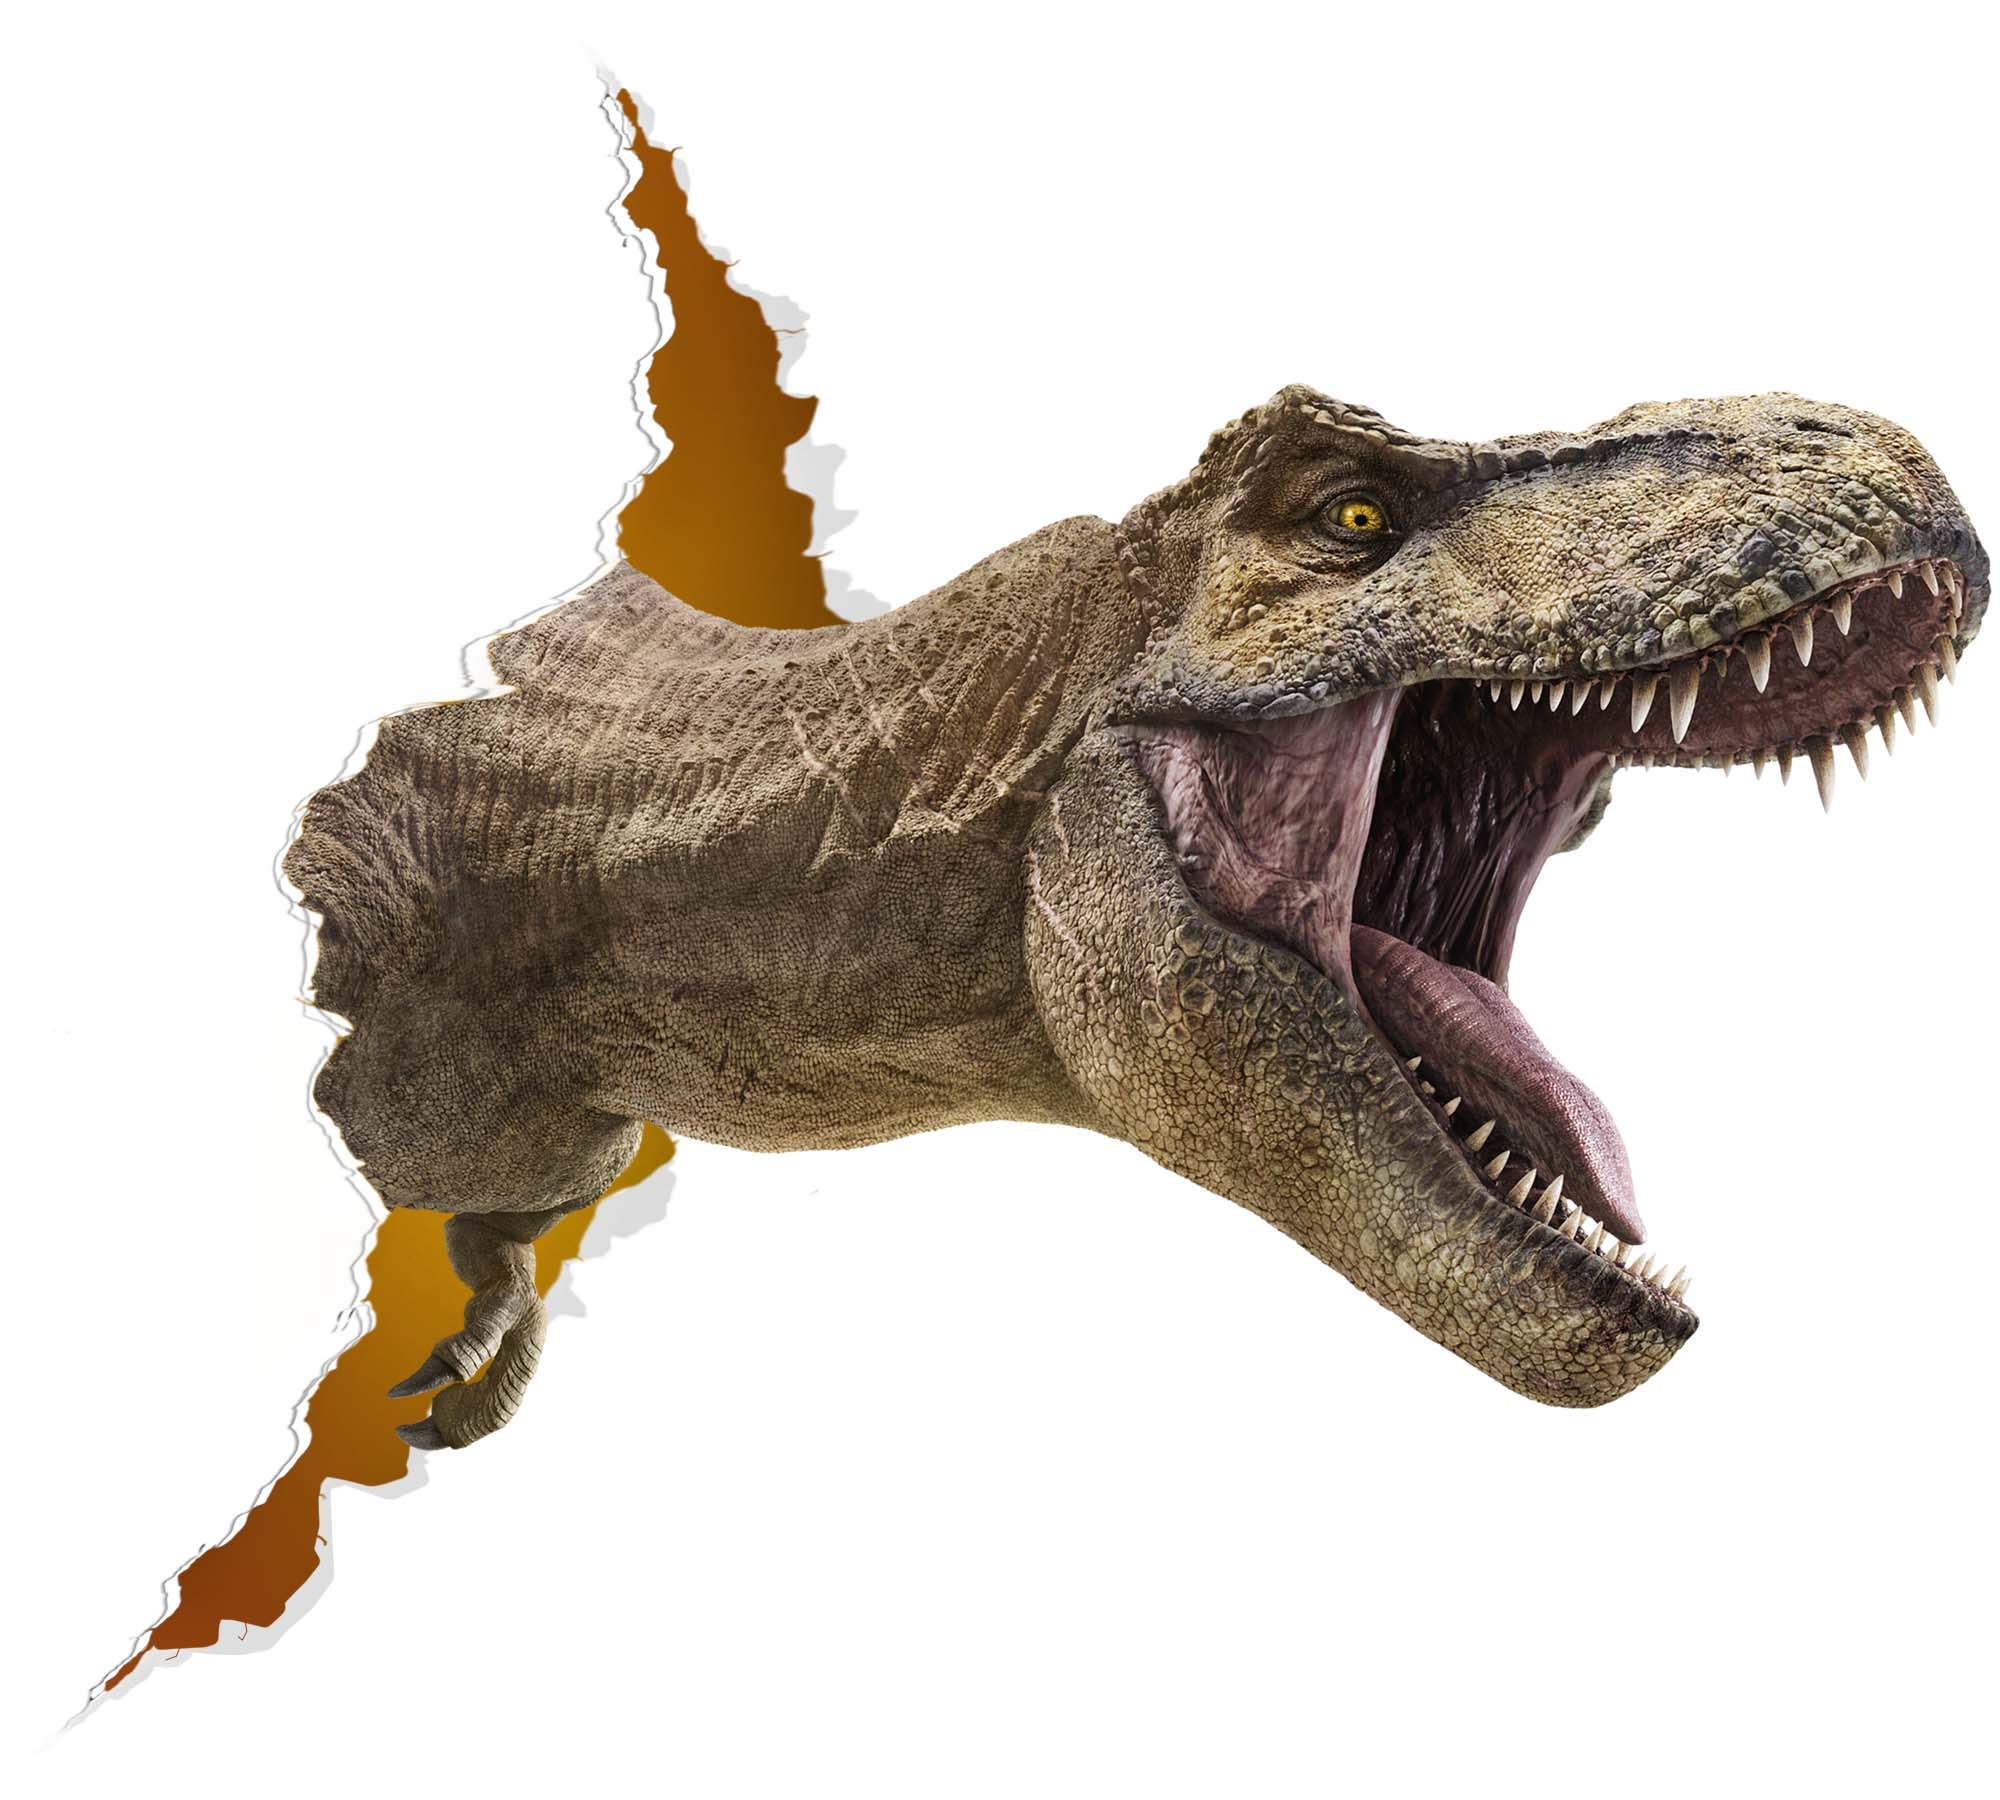 Scary Dino rawr